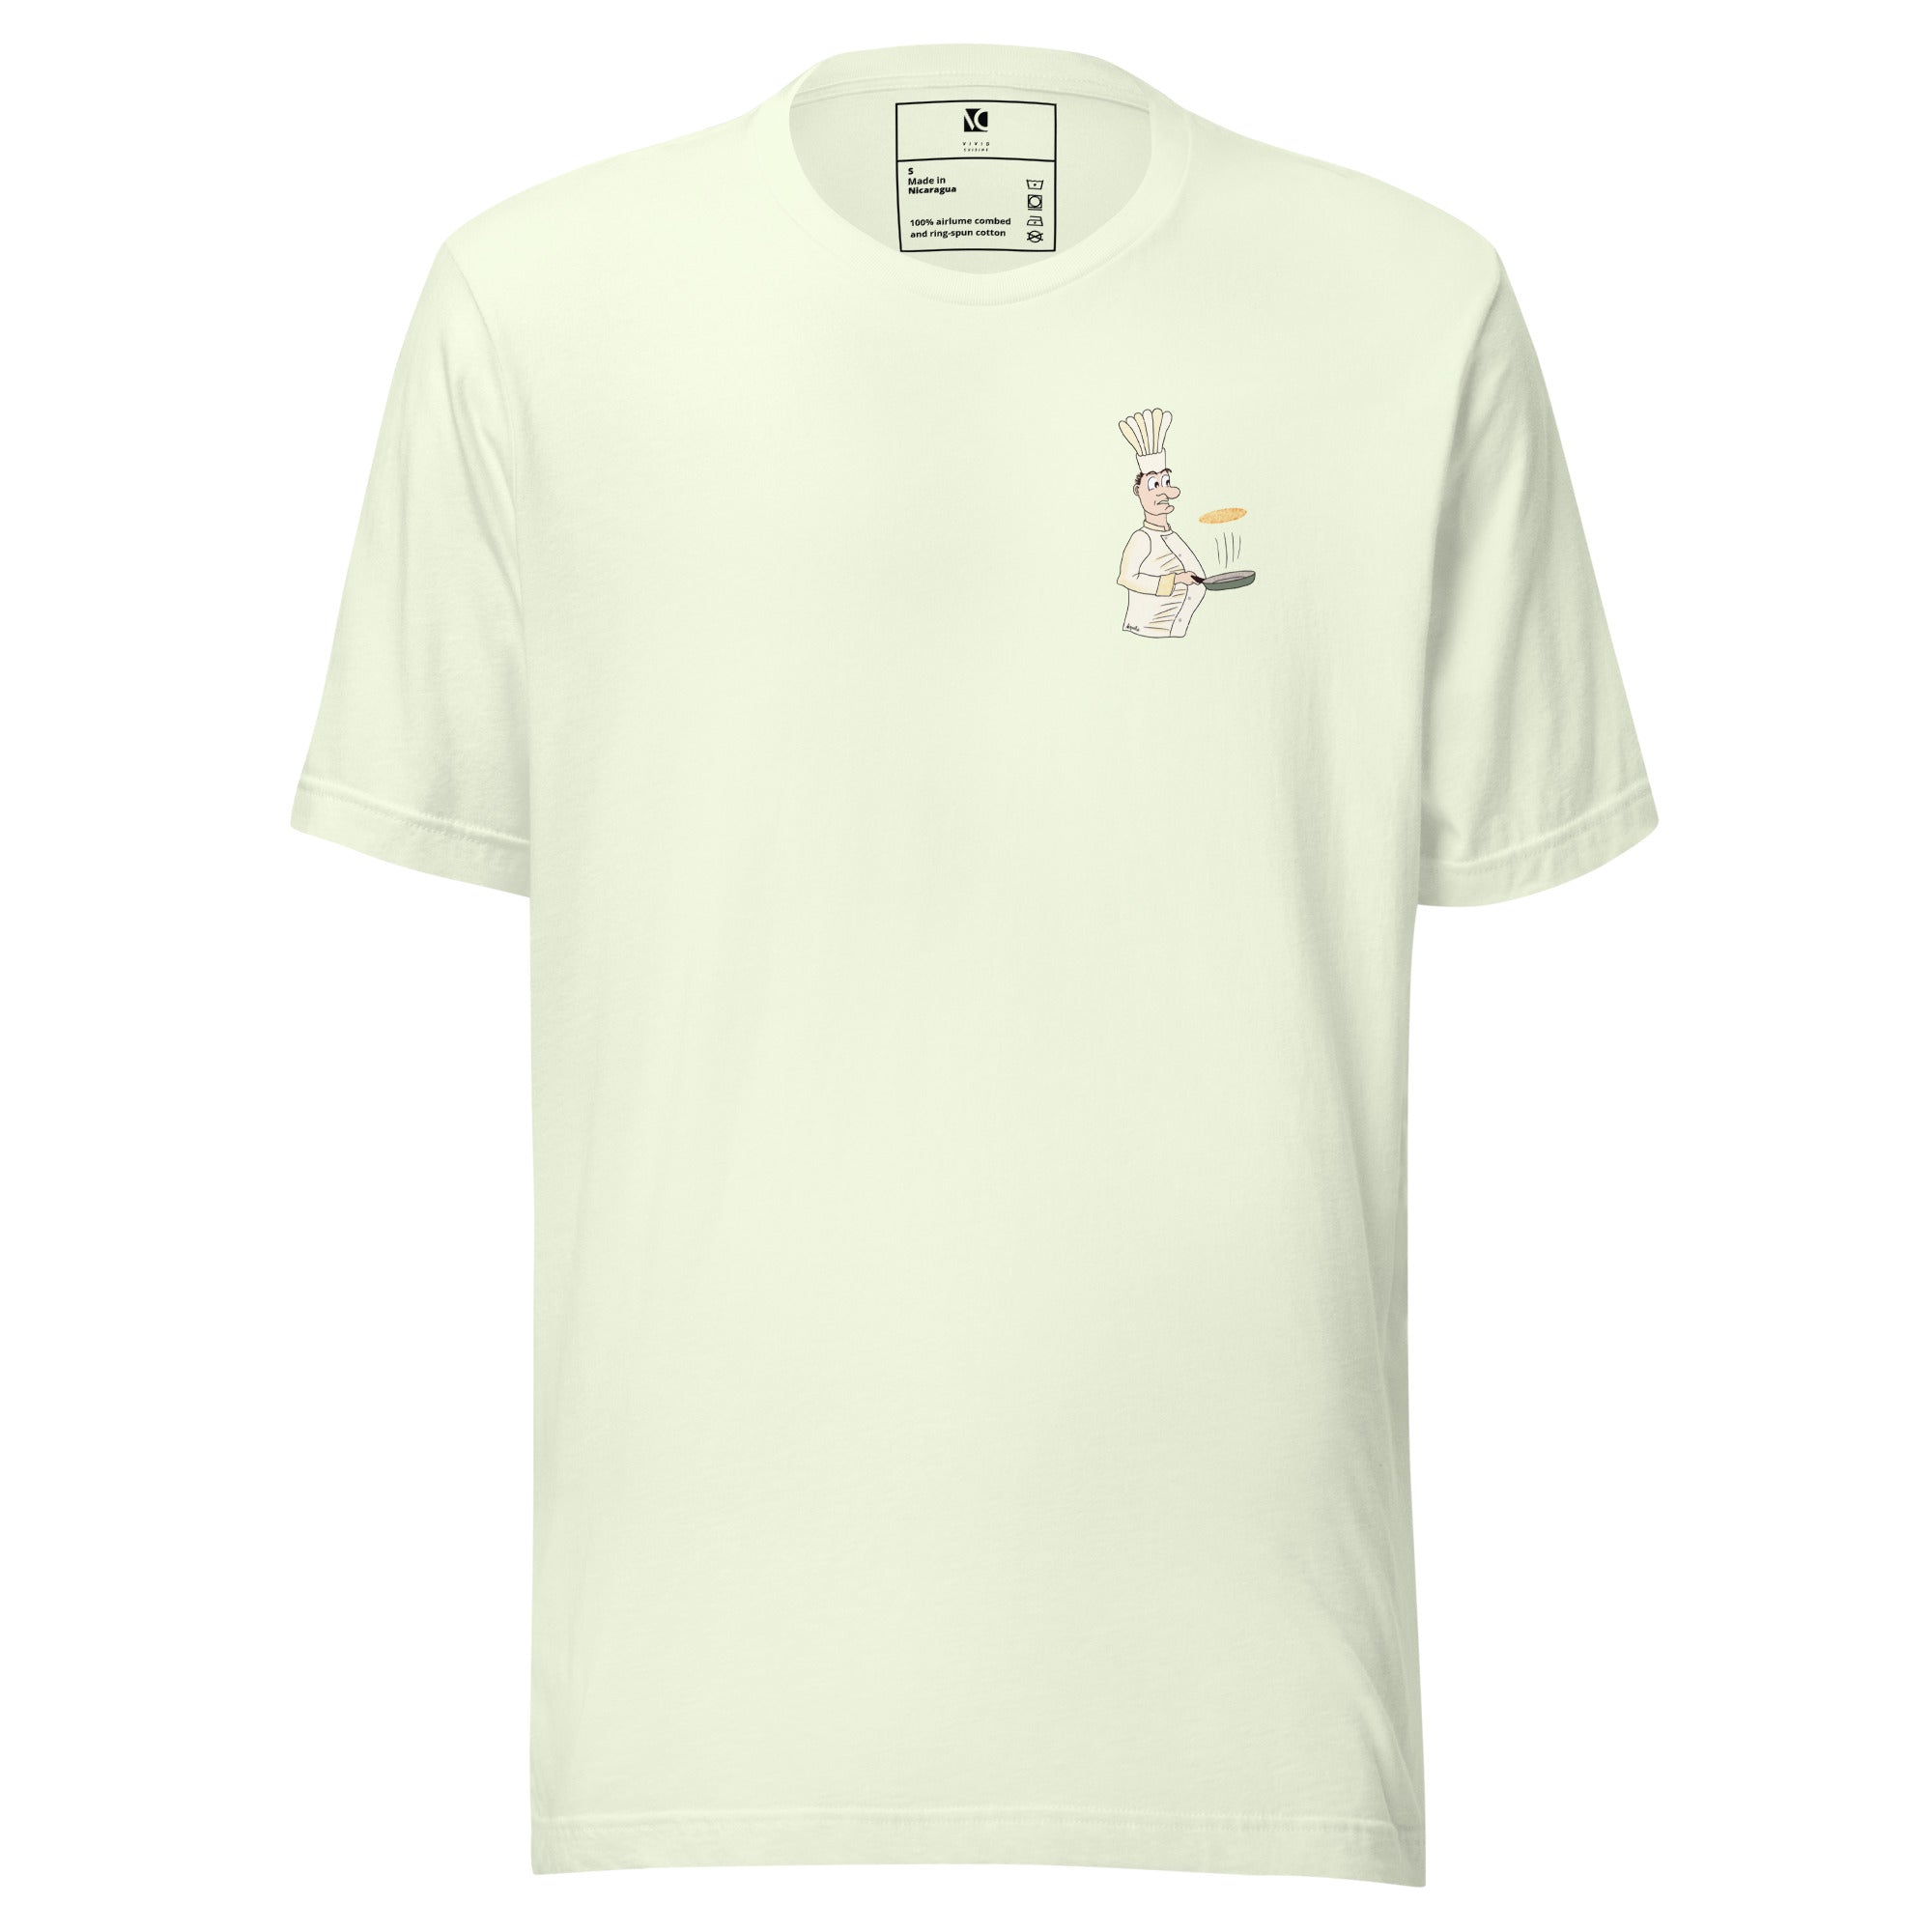 French Chef - Unisex T-Shirt